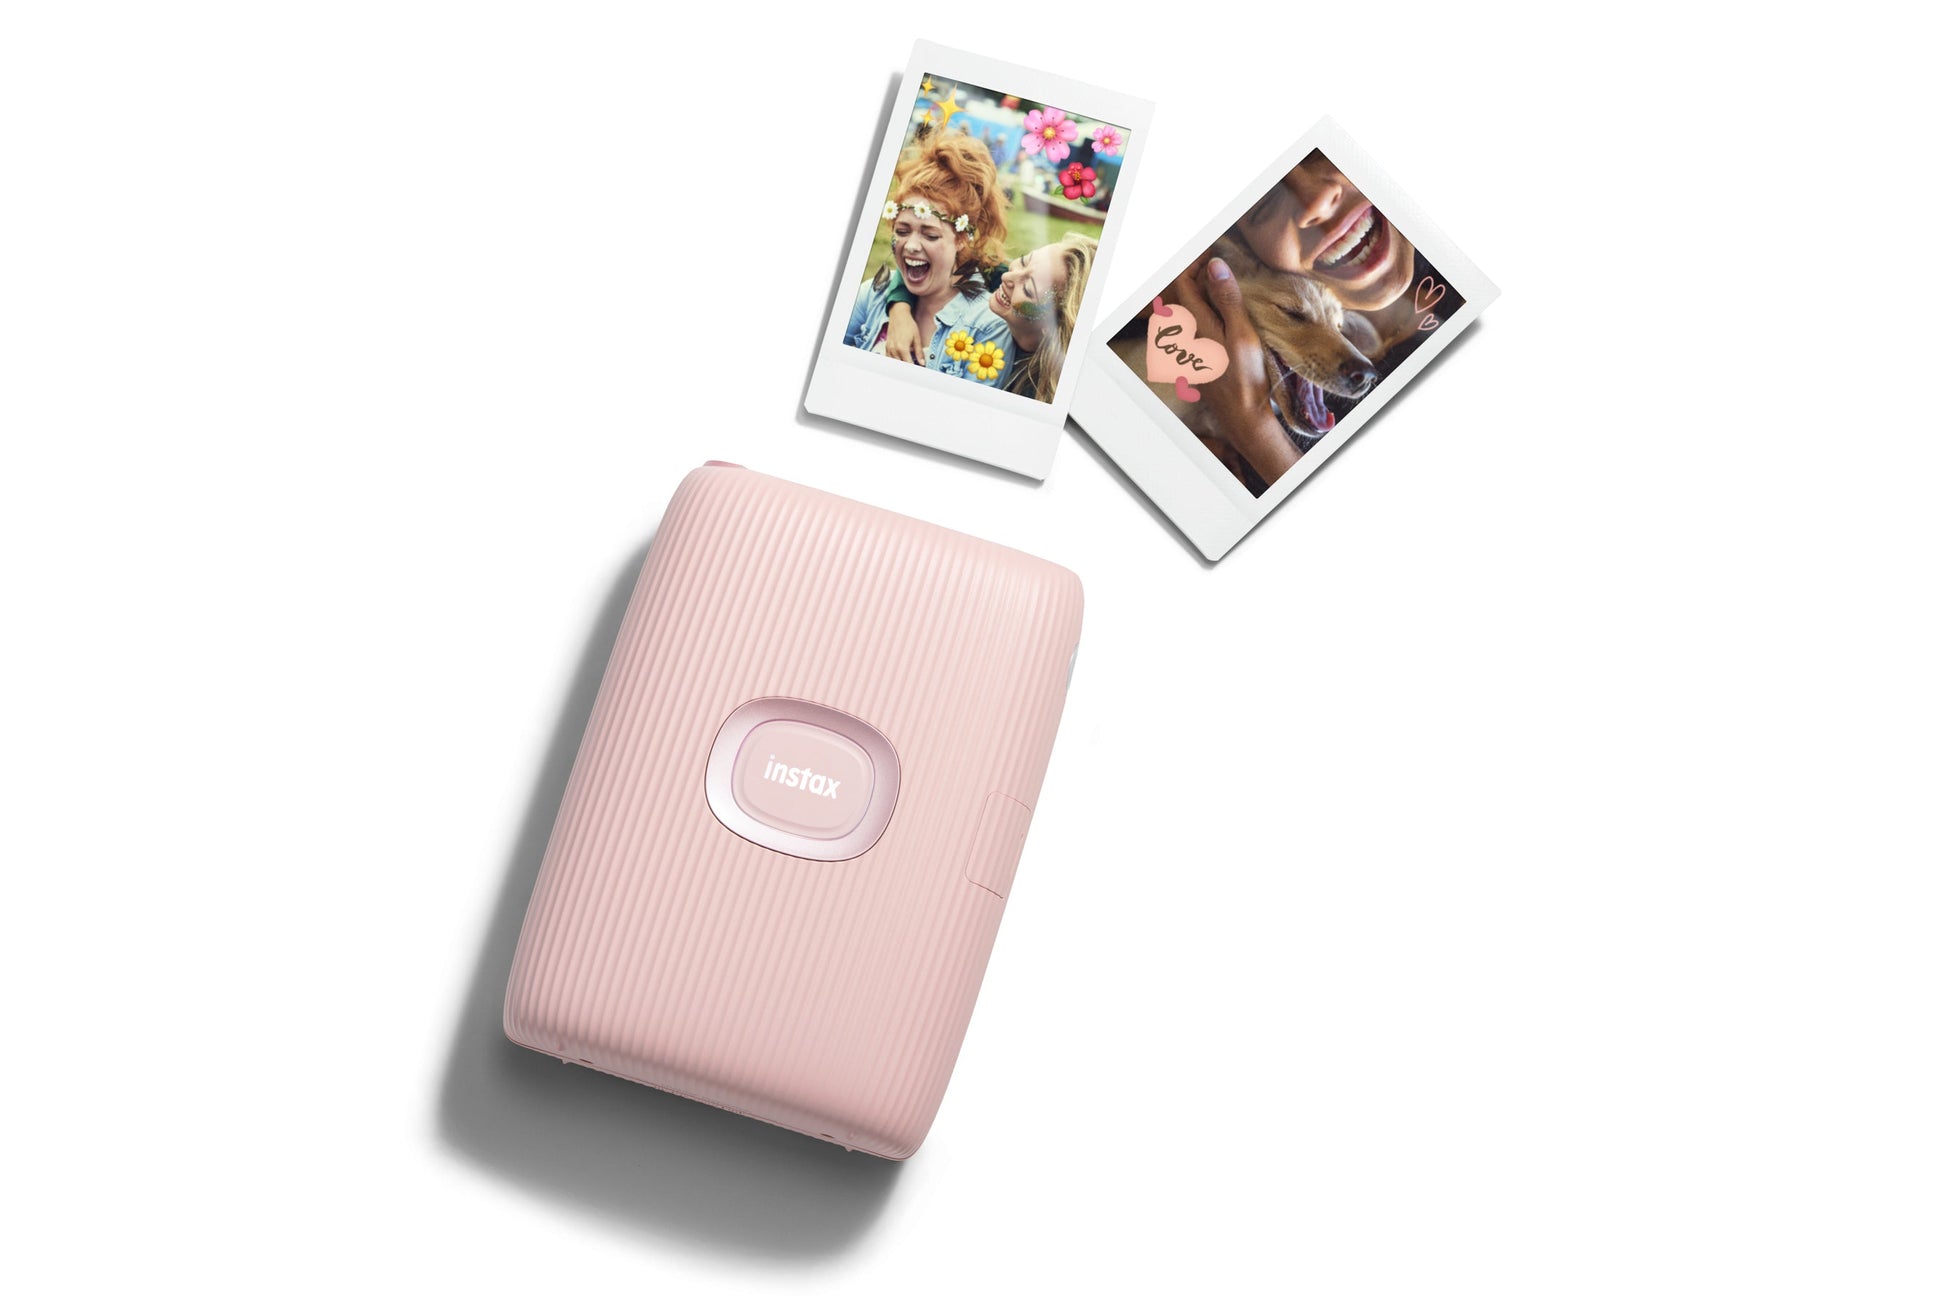 Fujifilm Photo Printer Instax Mini Link 2, Soft Pink 16767234